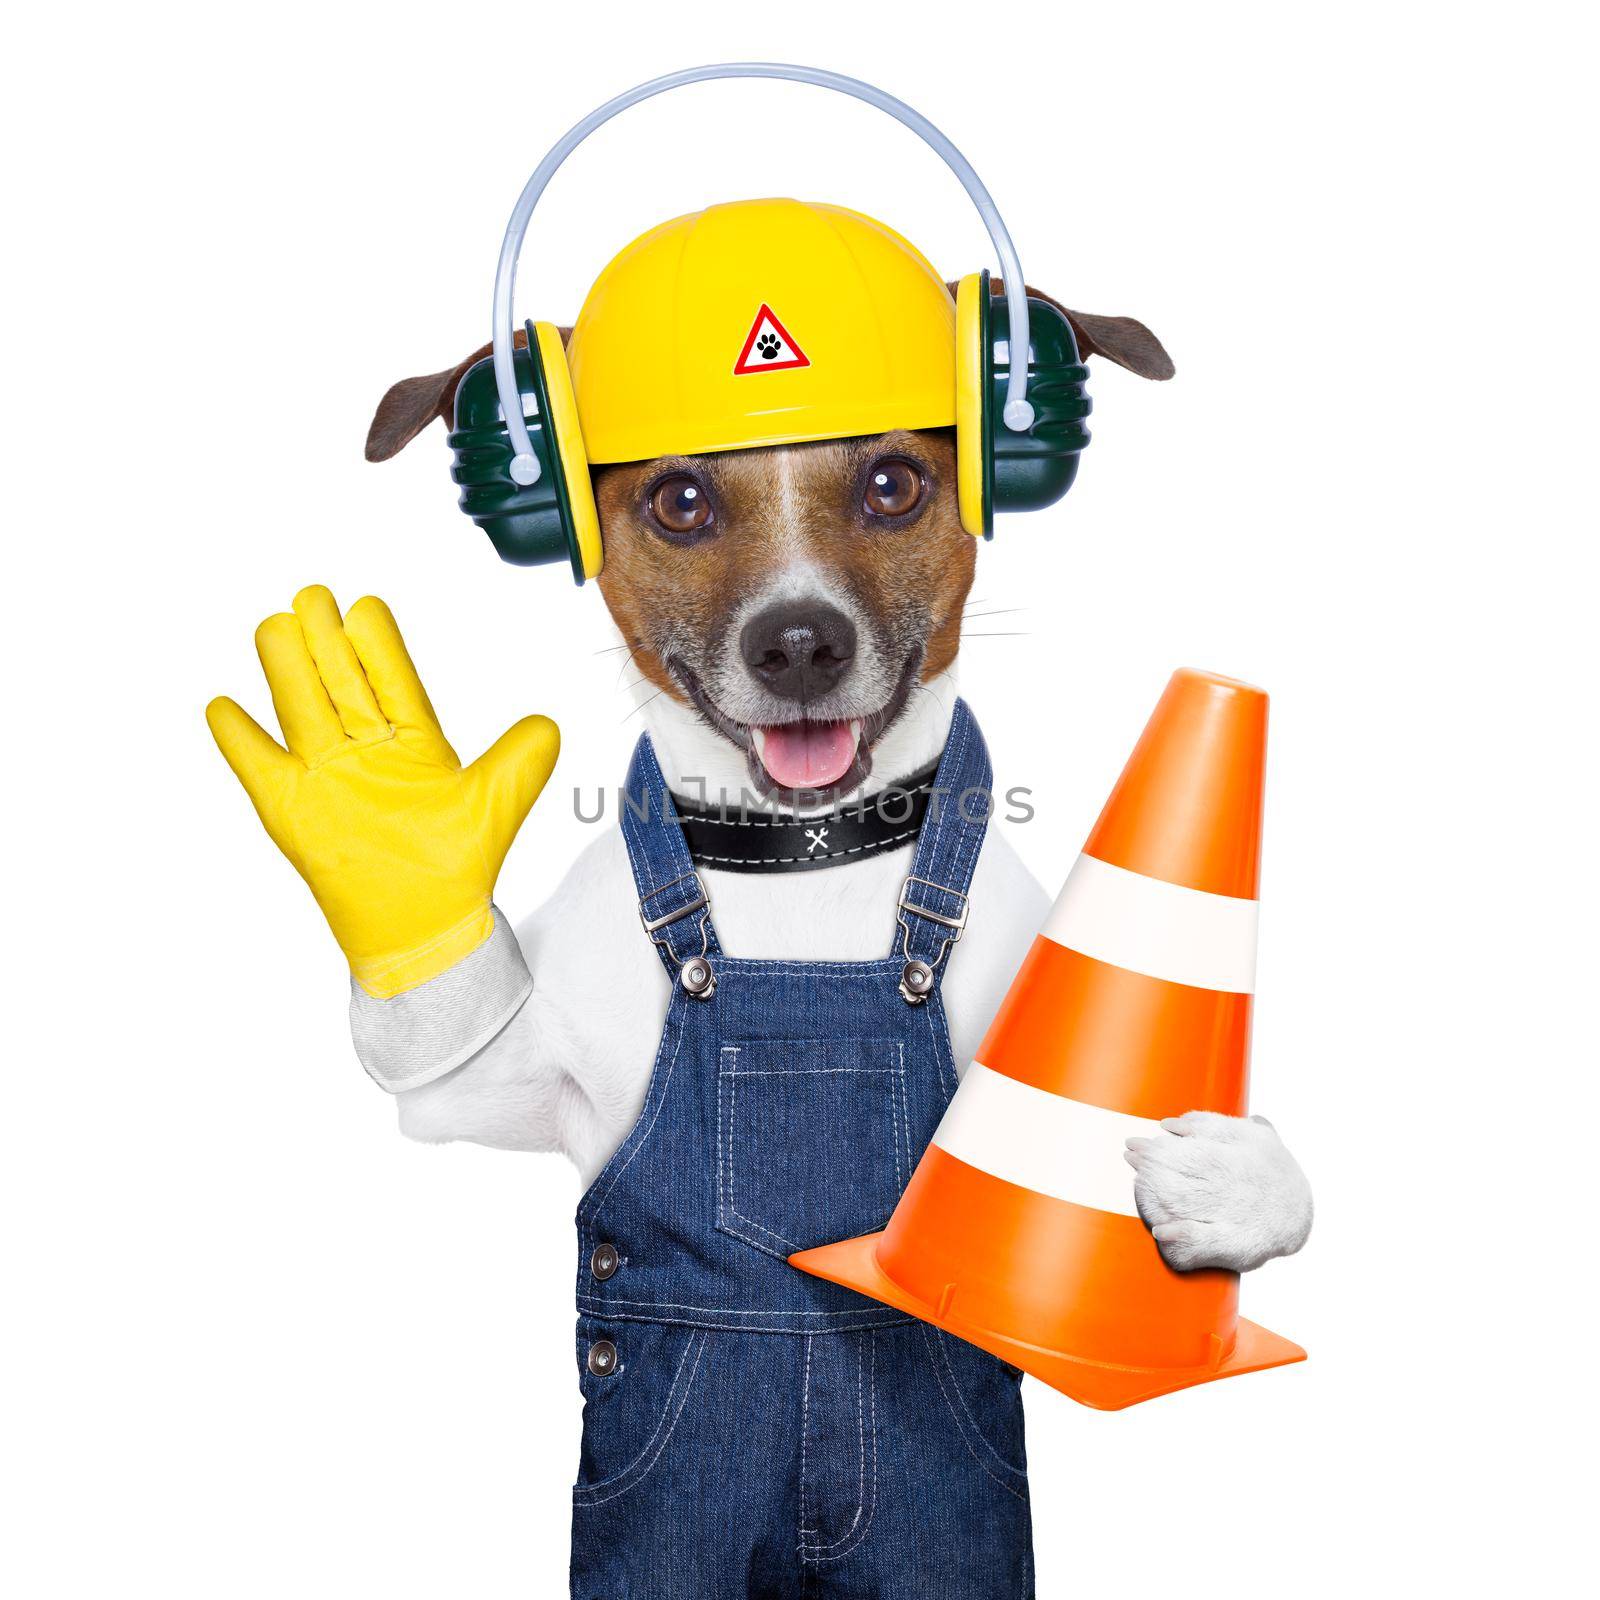 under construction dog by Brosch